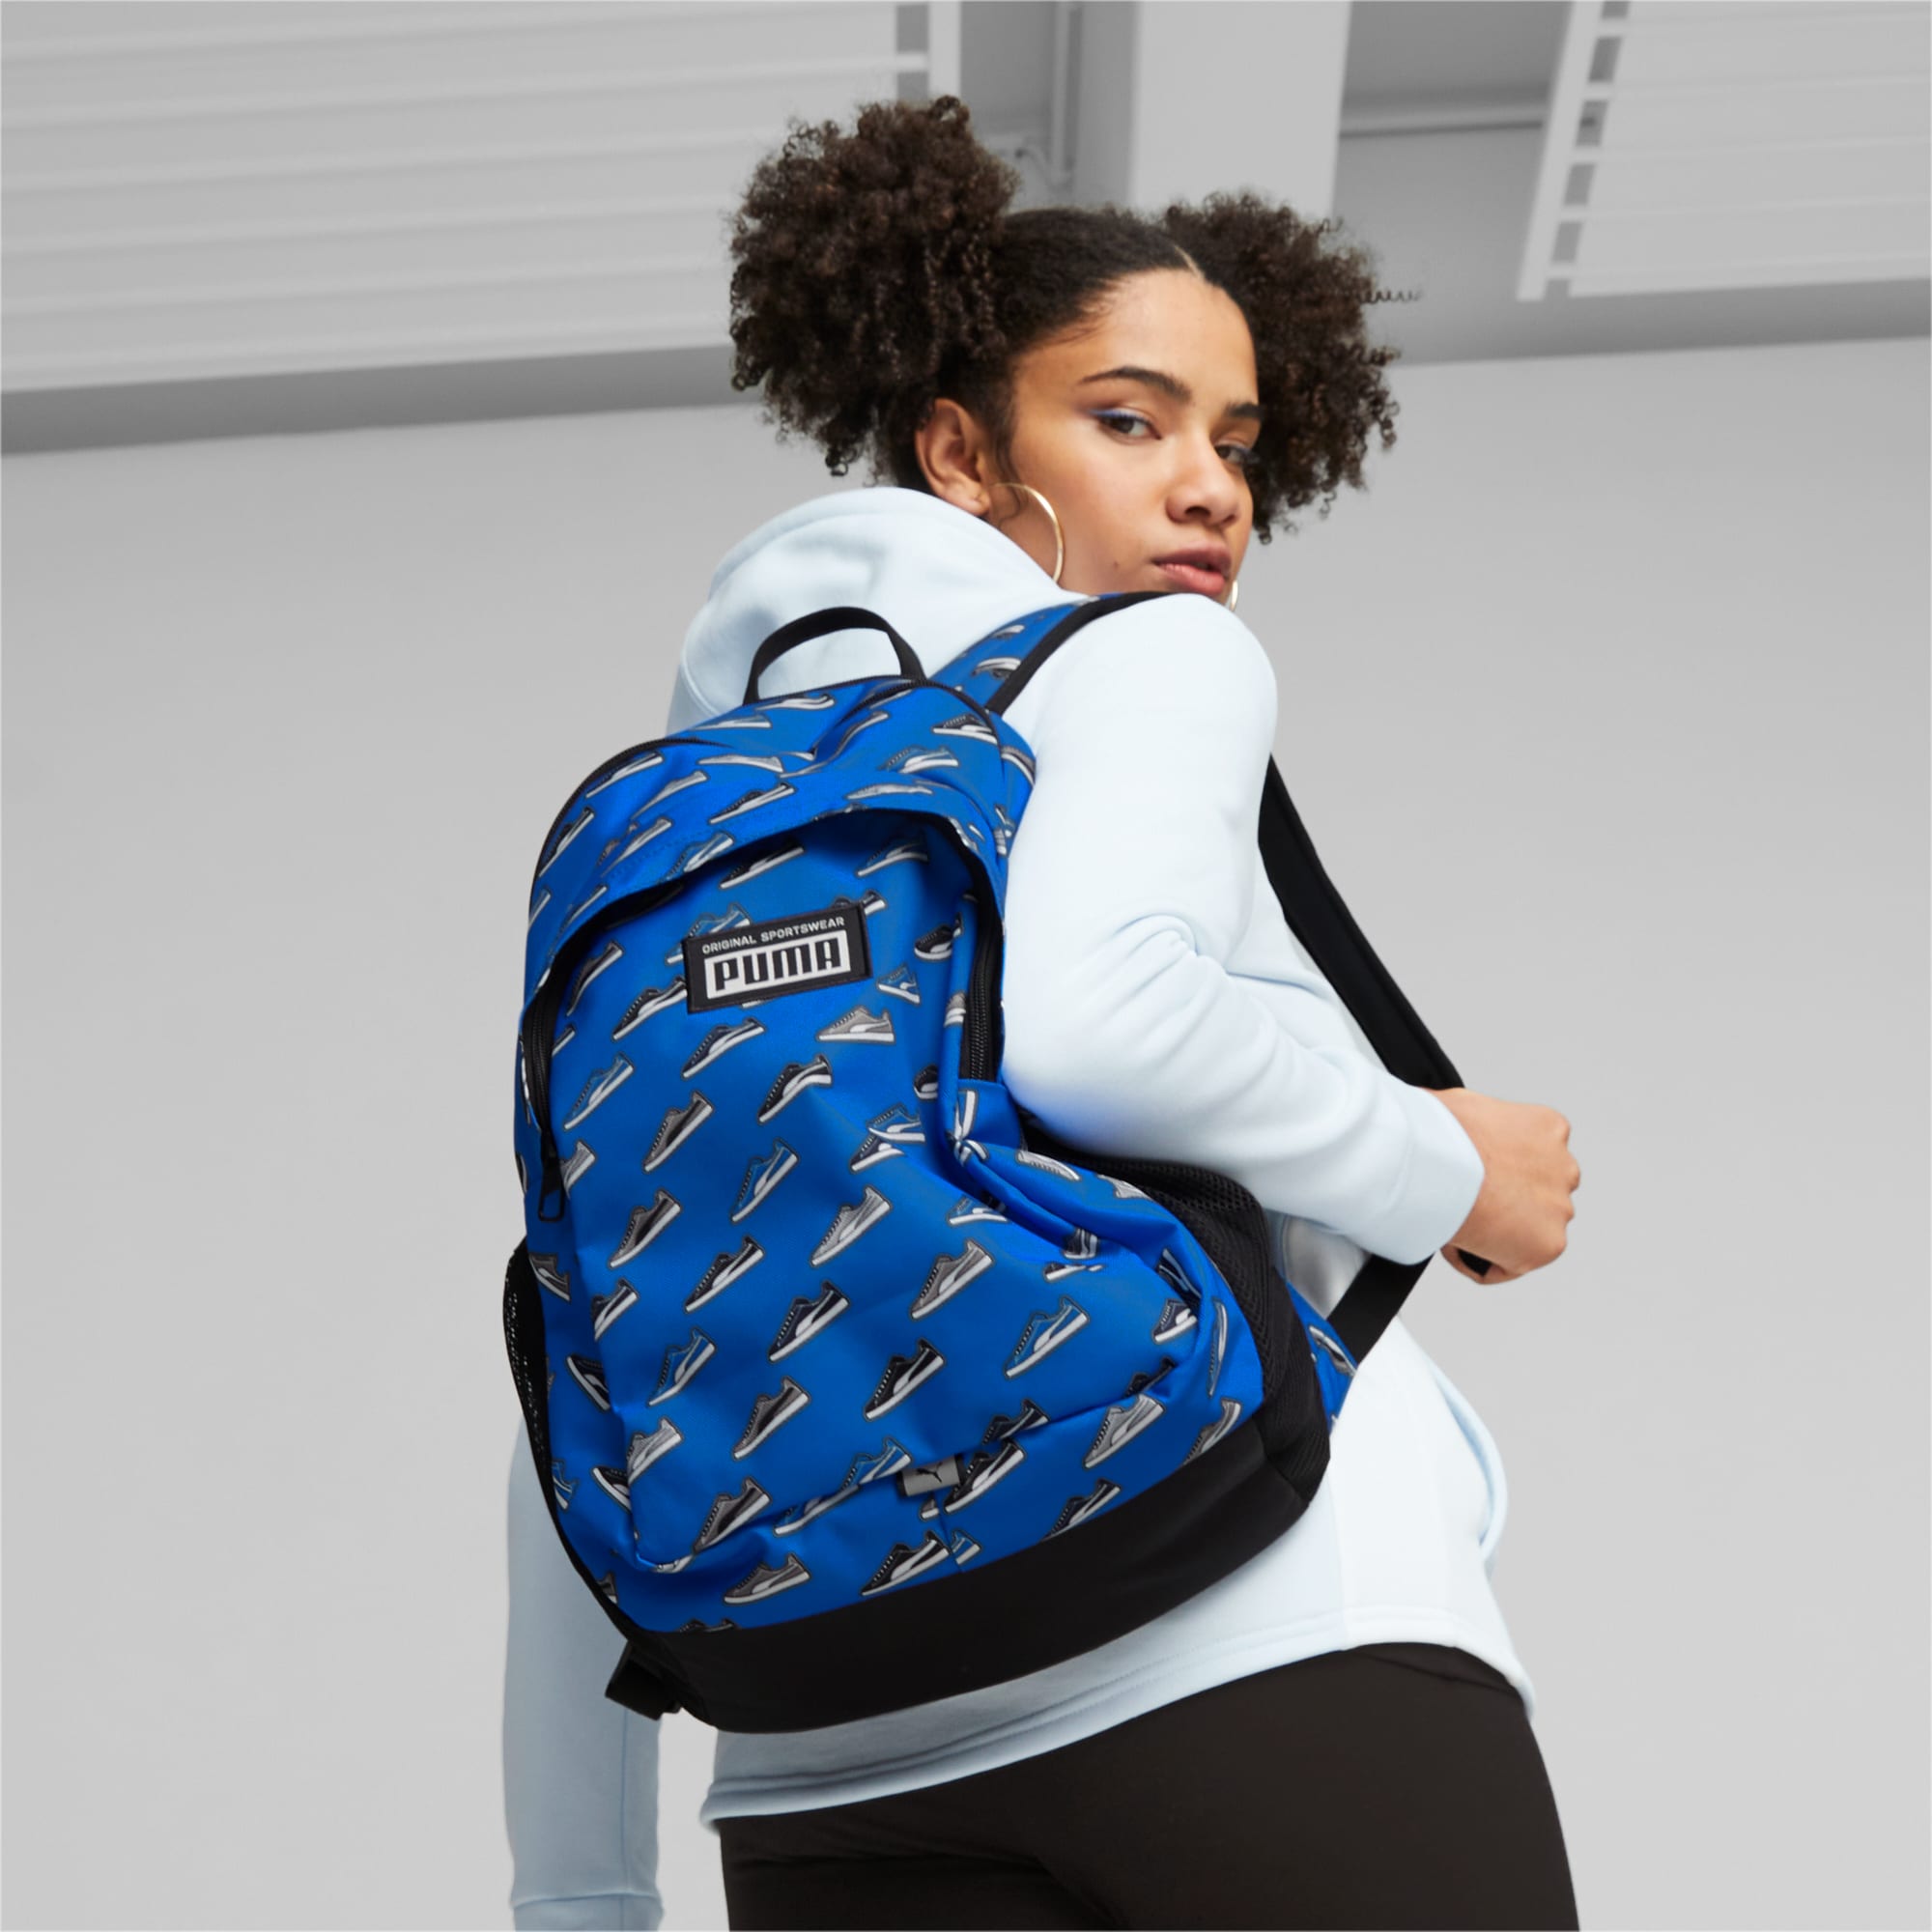 Women's PUMA Academy Backpack, Racing Blue/Sneaker AOP